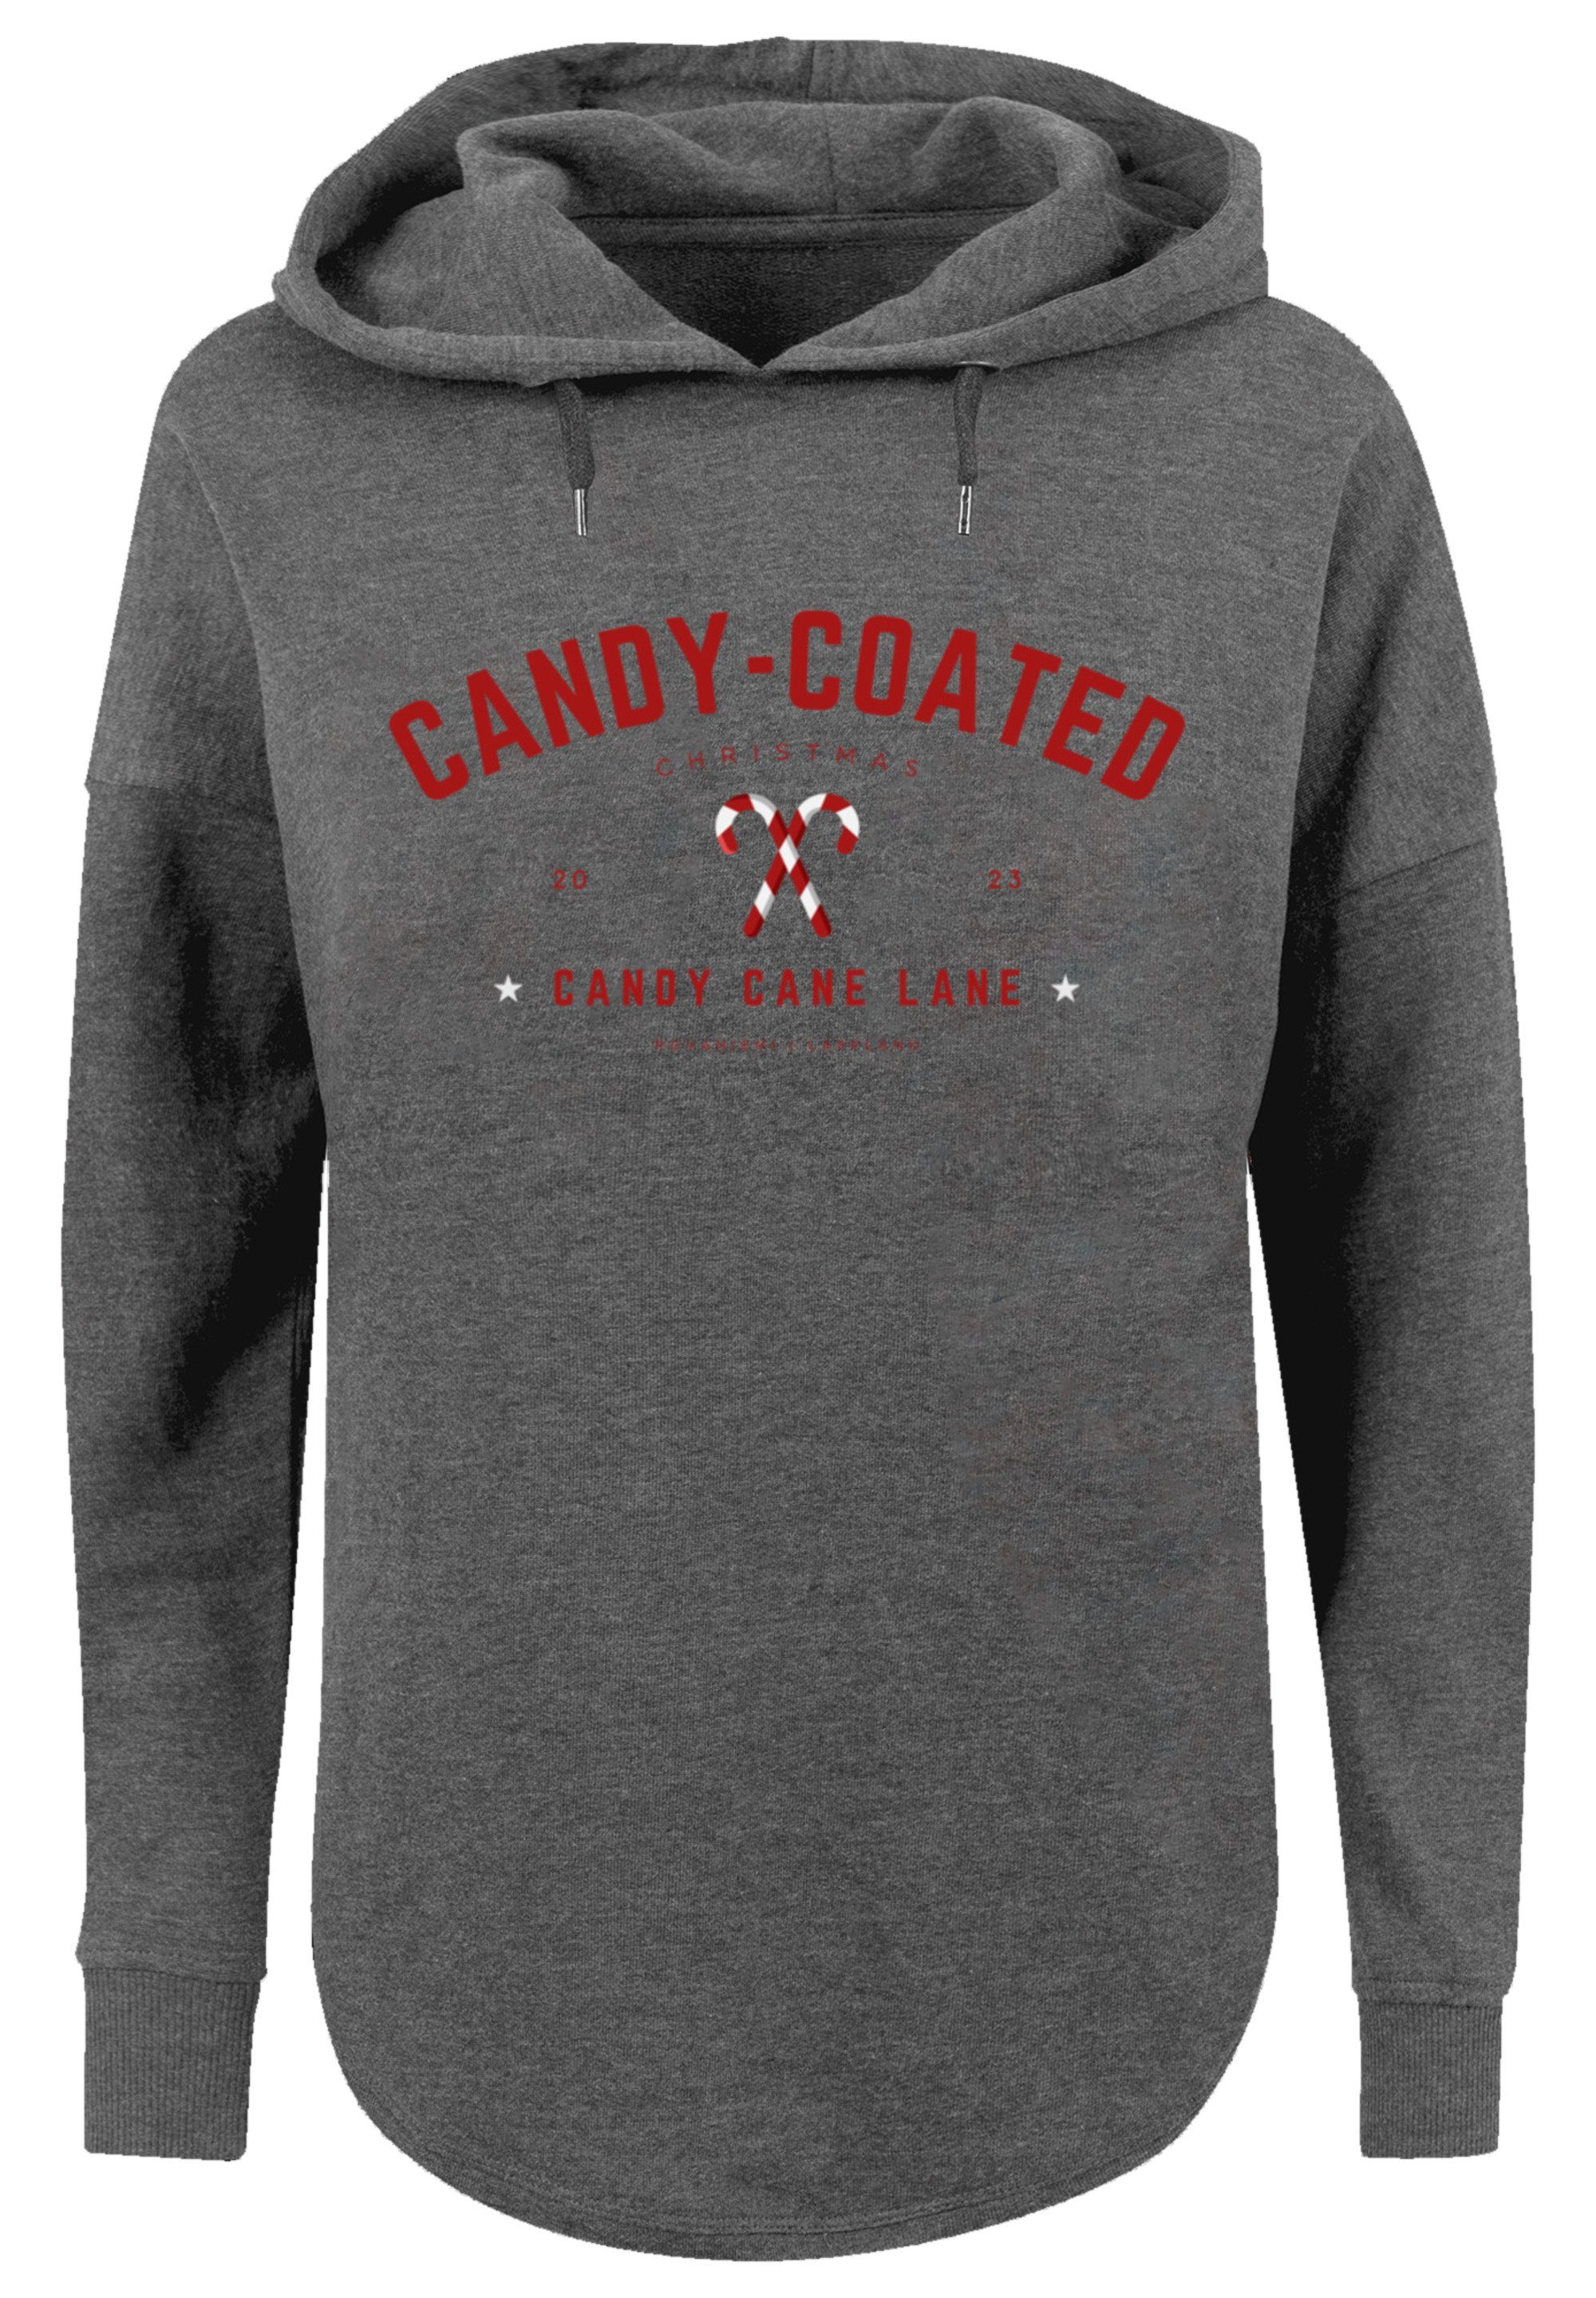 Candy charcoal F4NT4STIC Coated Geschenk, Weihnachten Logo Sweatshirt Christmas Weihnachten,